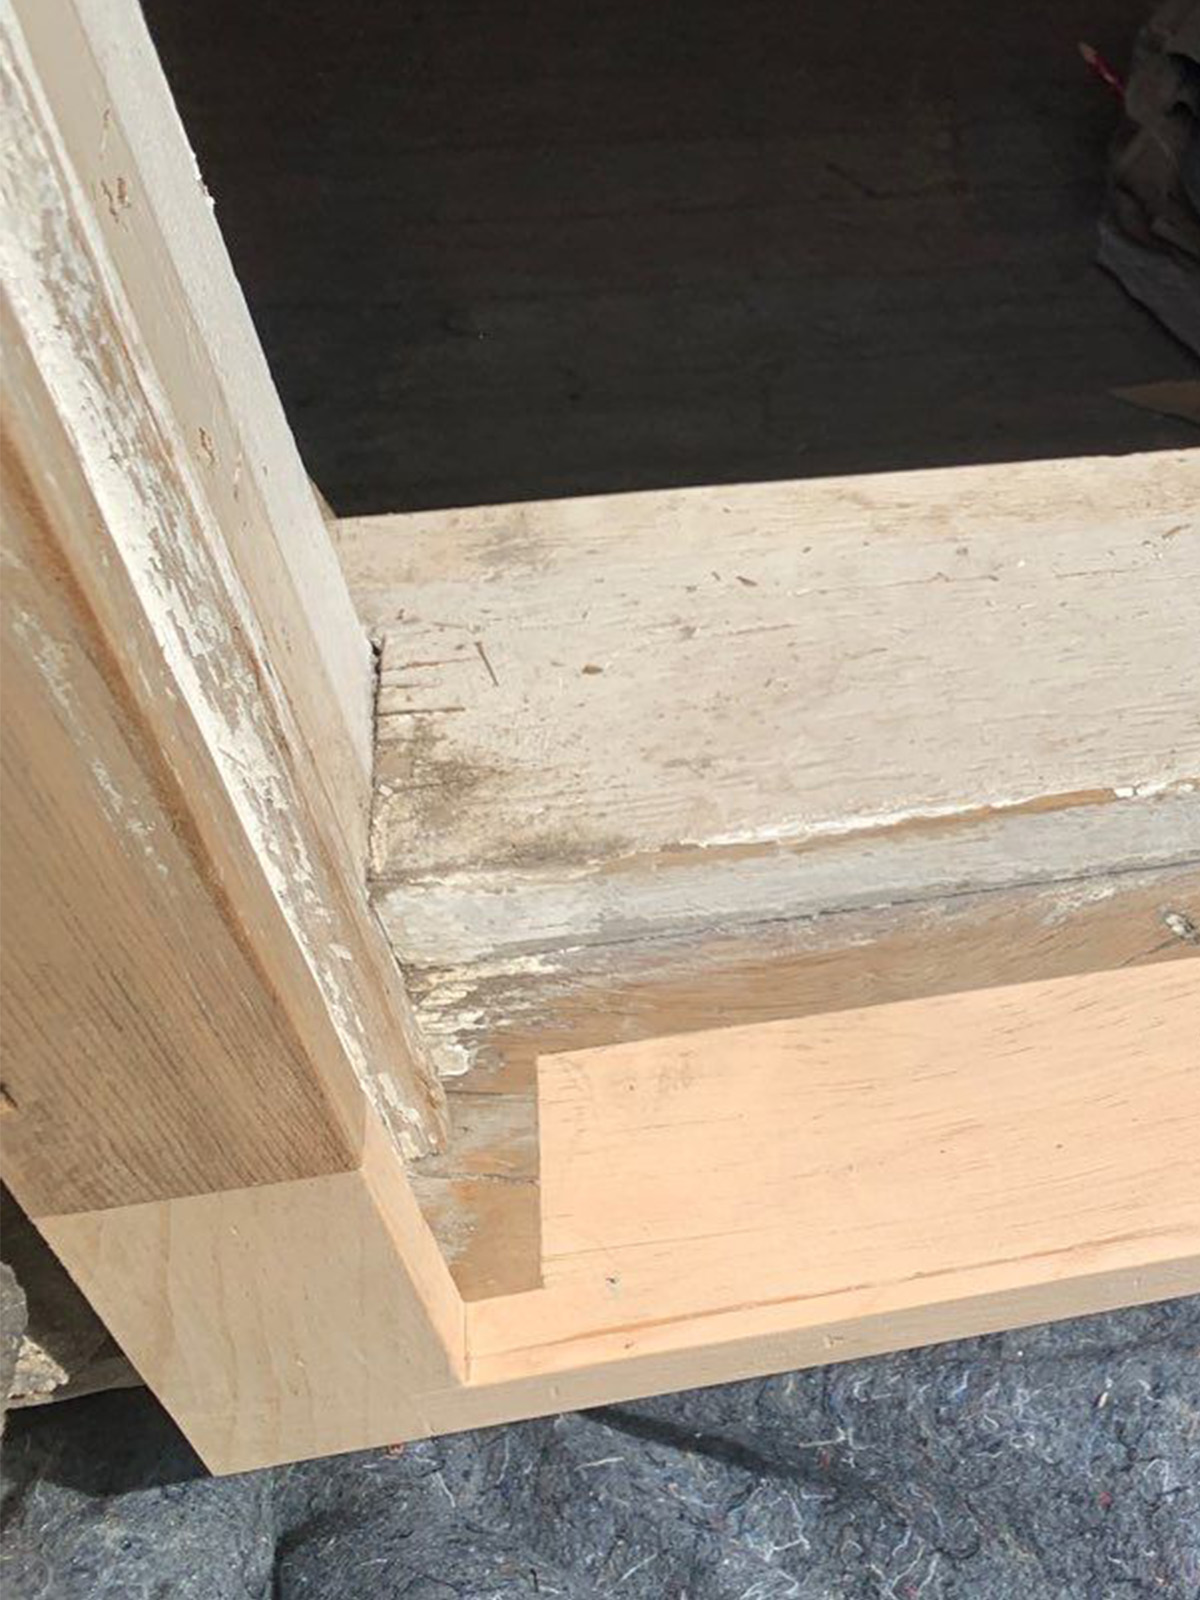 New Wood Used To Repair Victorian Door Frame